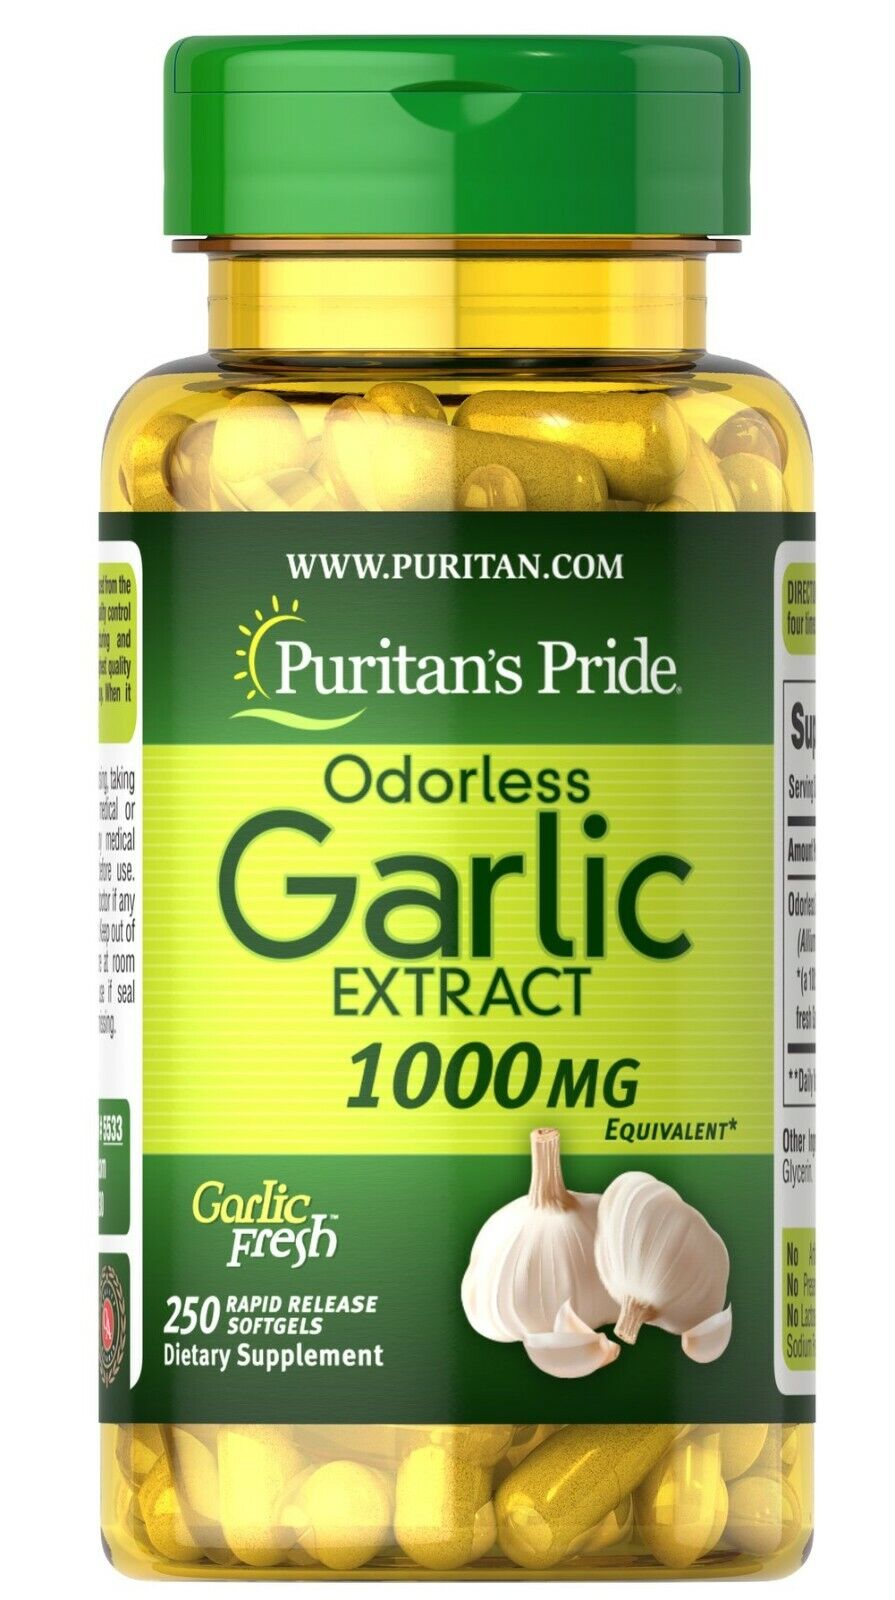 Puritan's Pride Odorless Garlic extract 1000 mg 250 Rapid Release Softgels